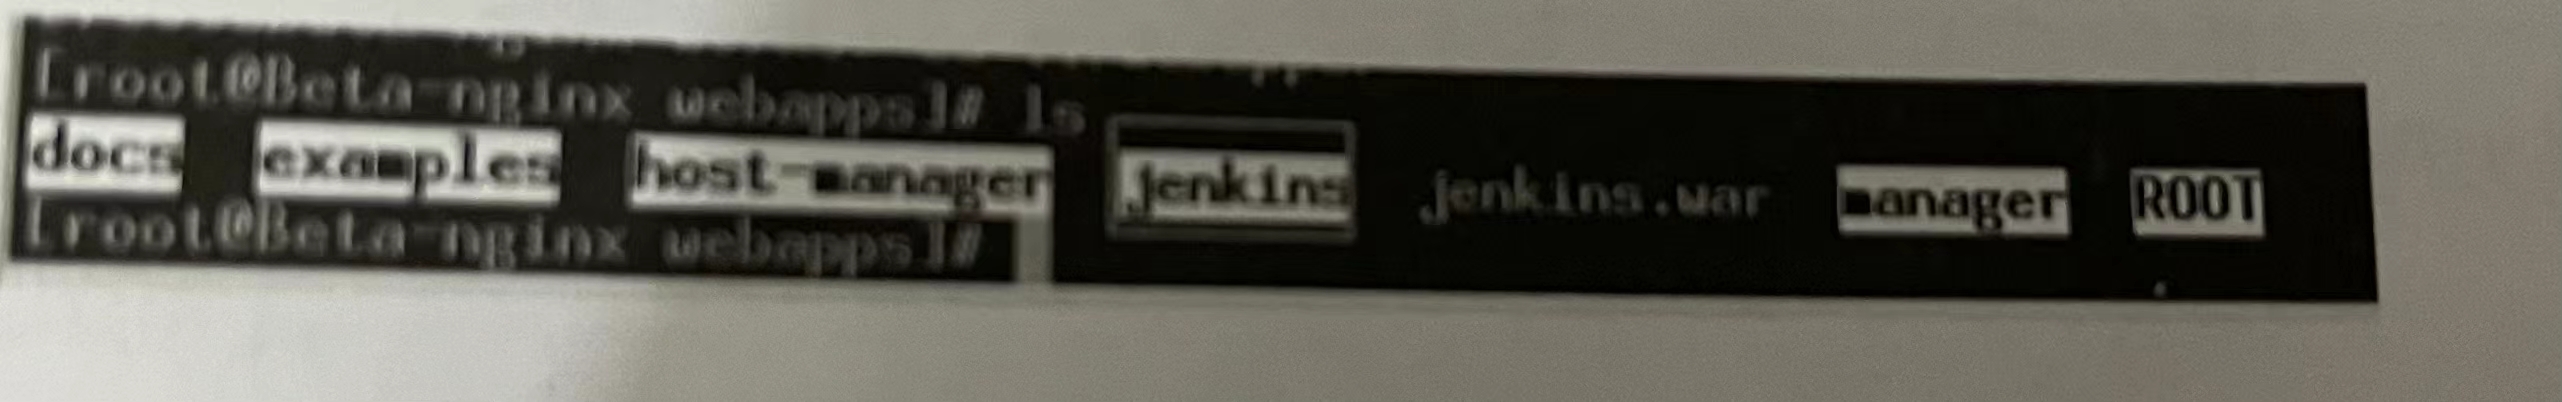 部署Jenkins